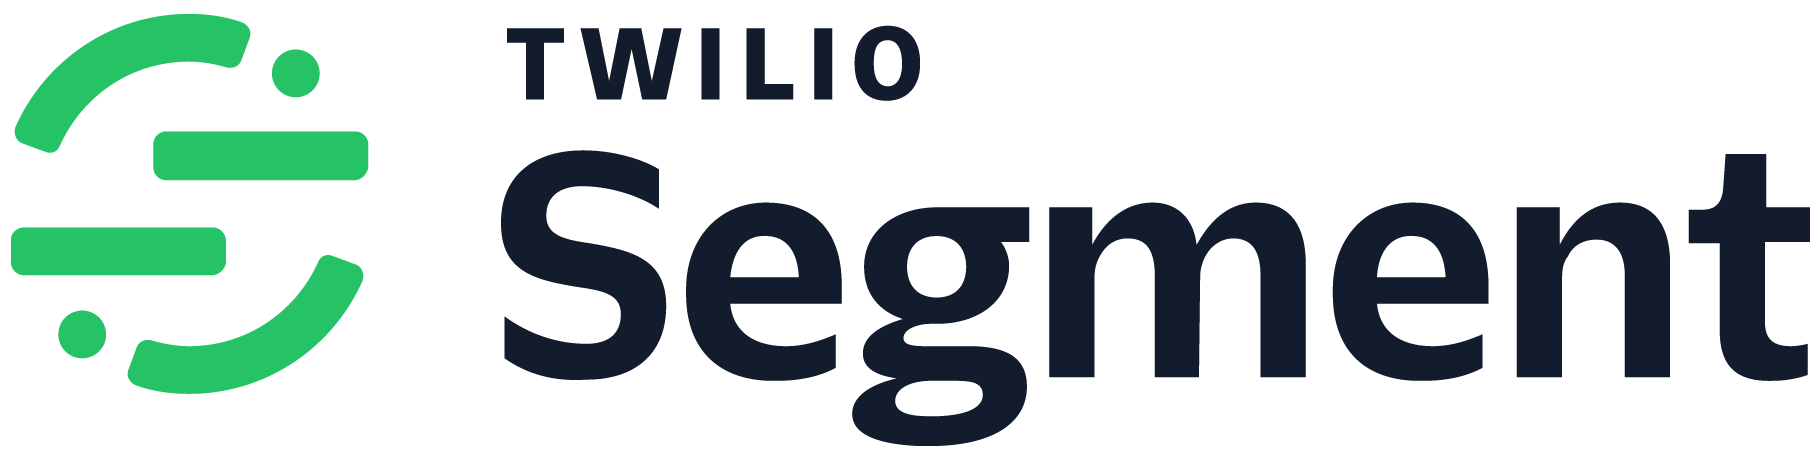 Twilio Segment Logo